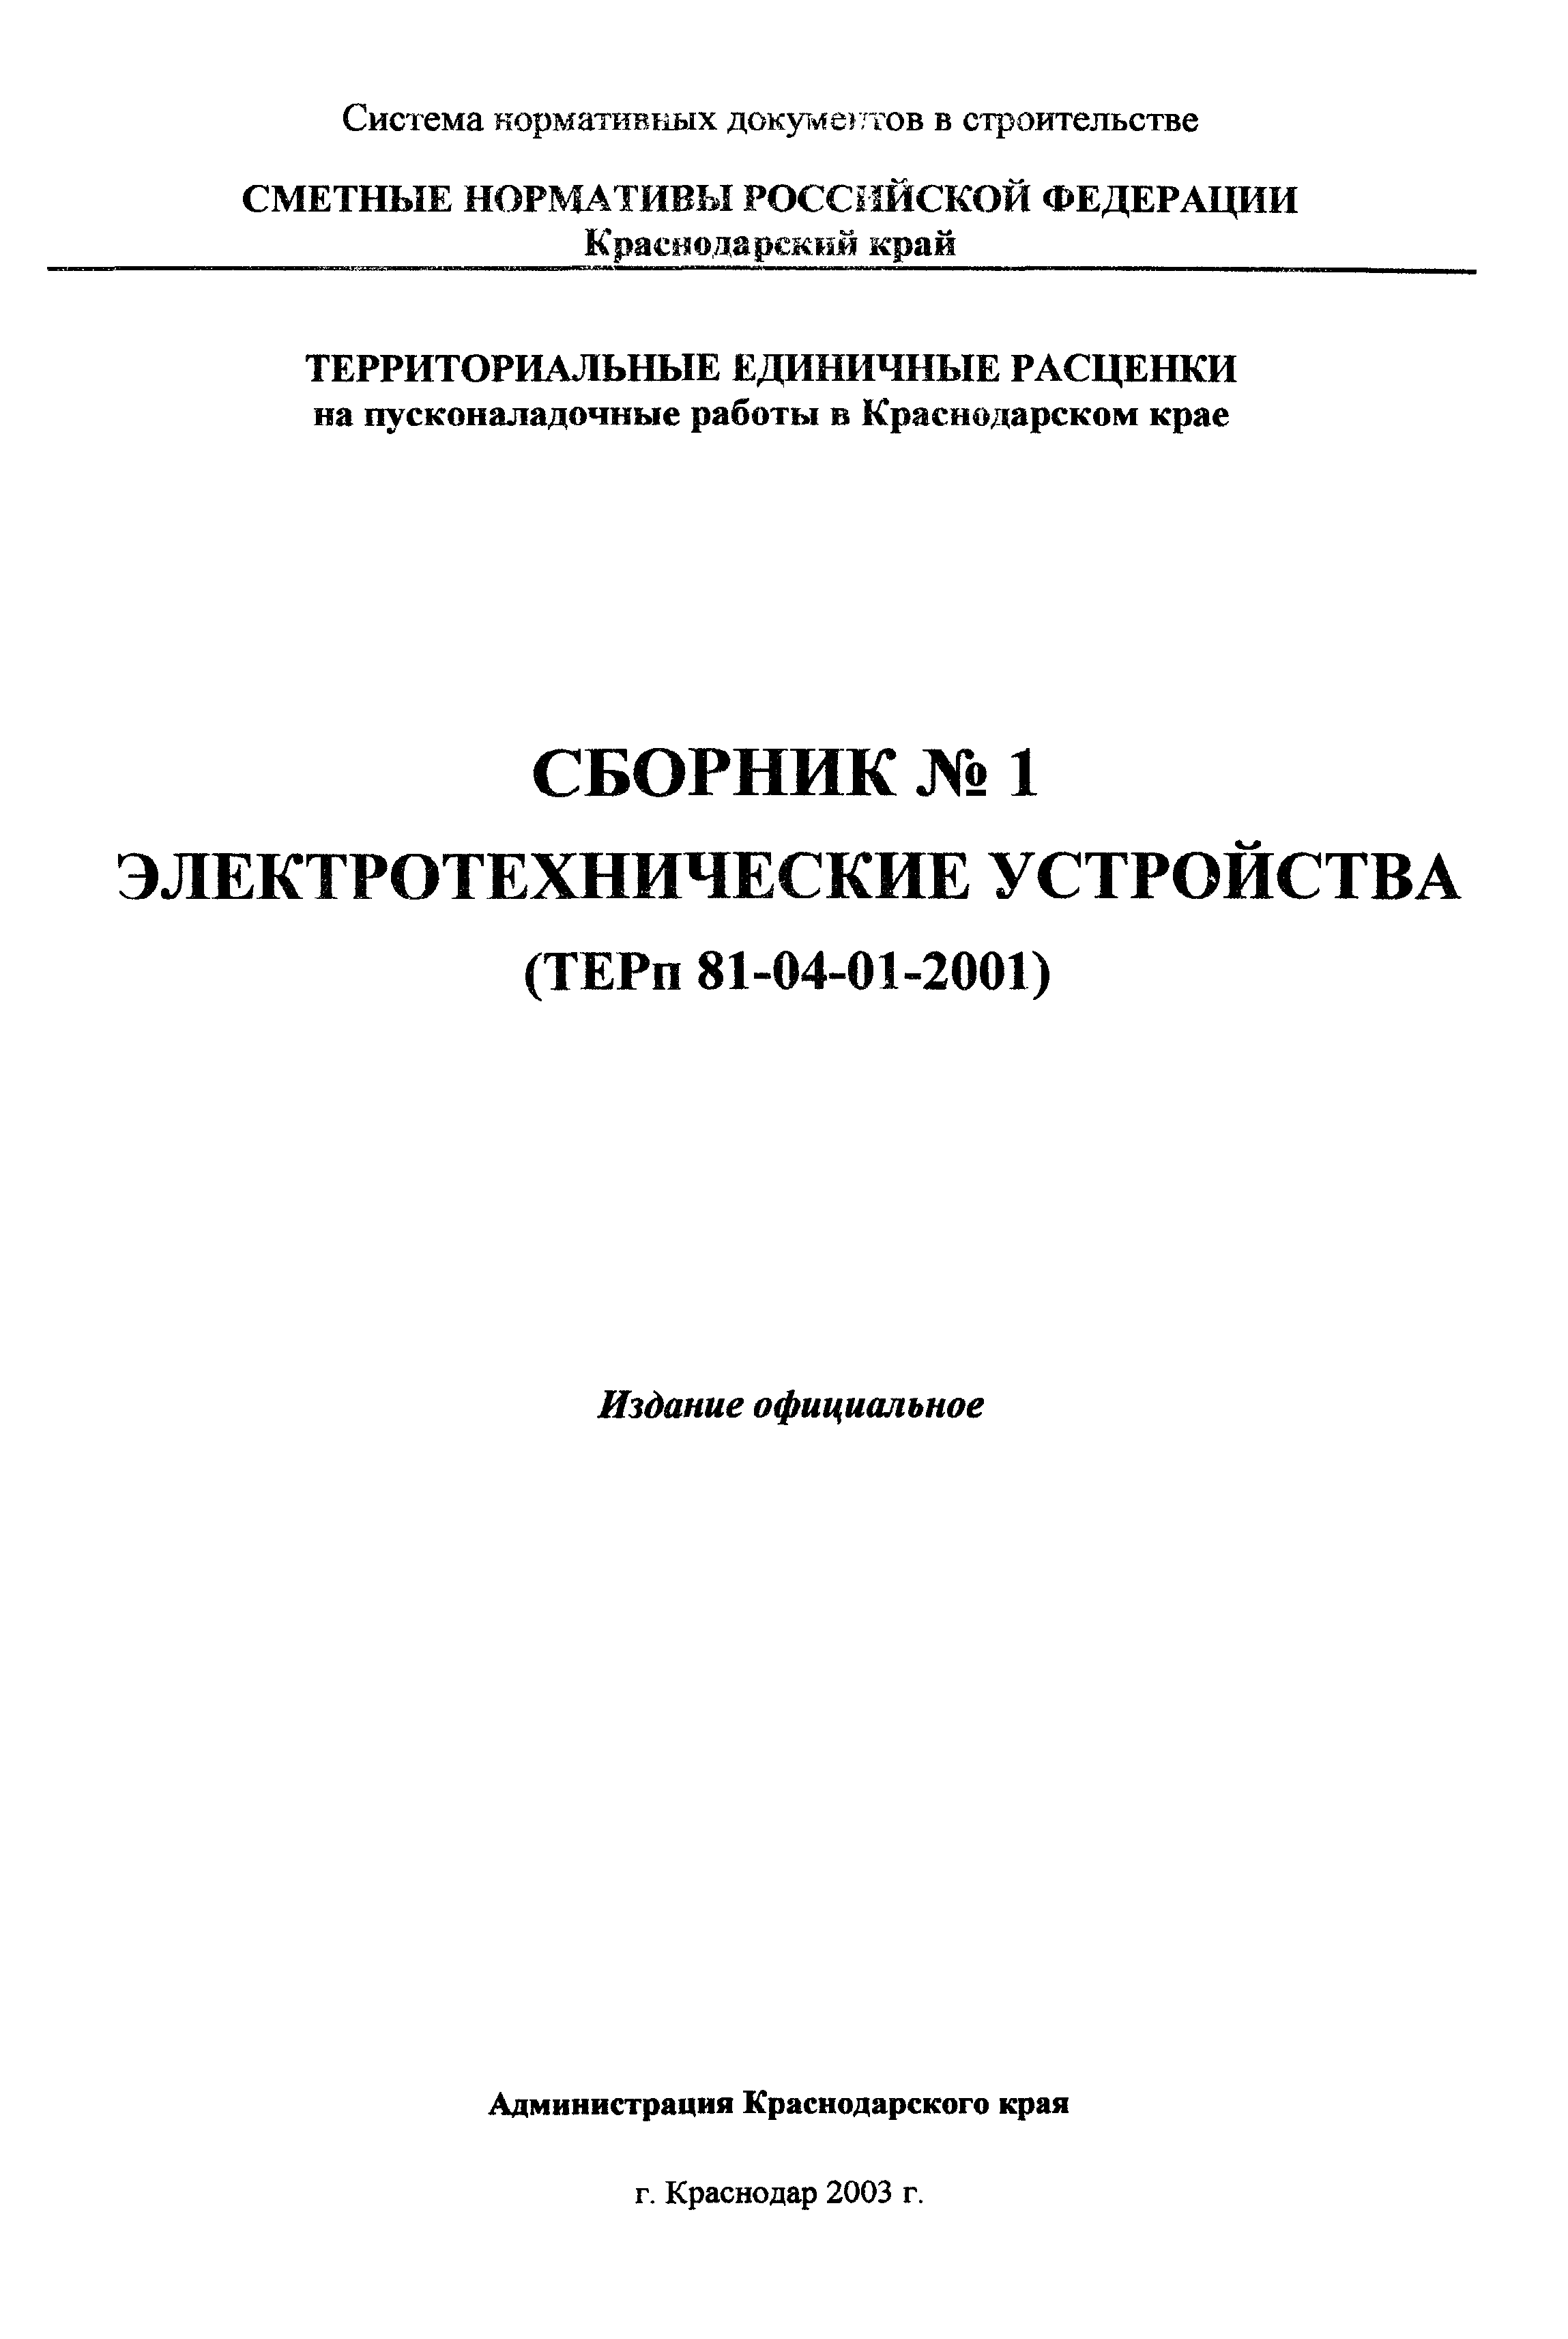 ТЕРп Краснодарского края 2001-01